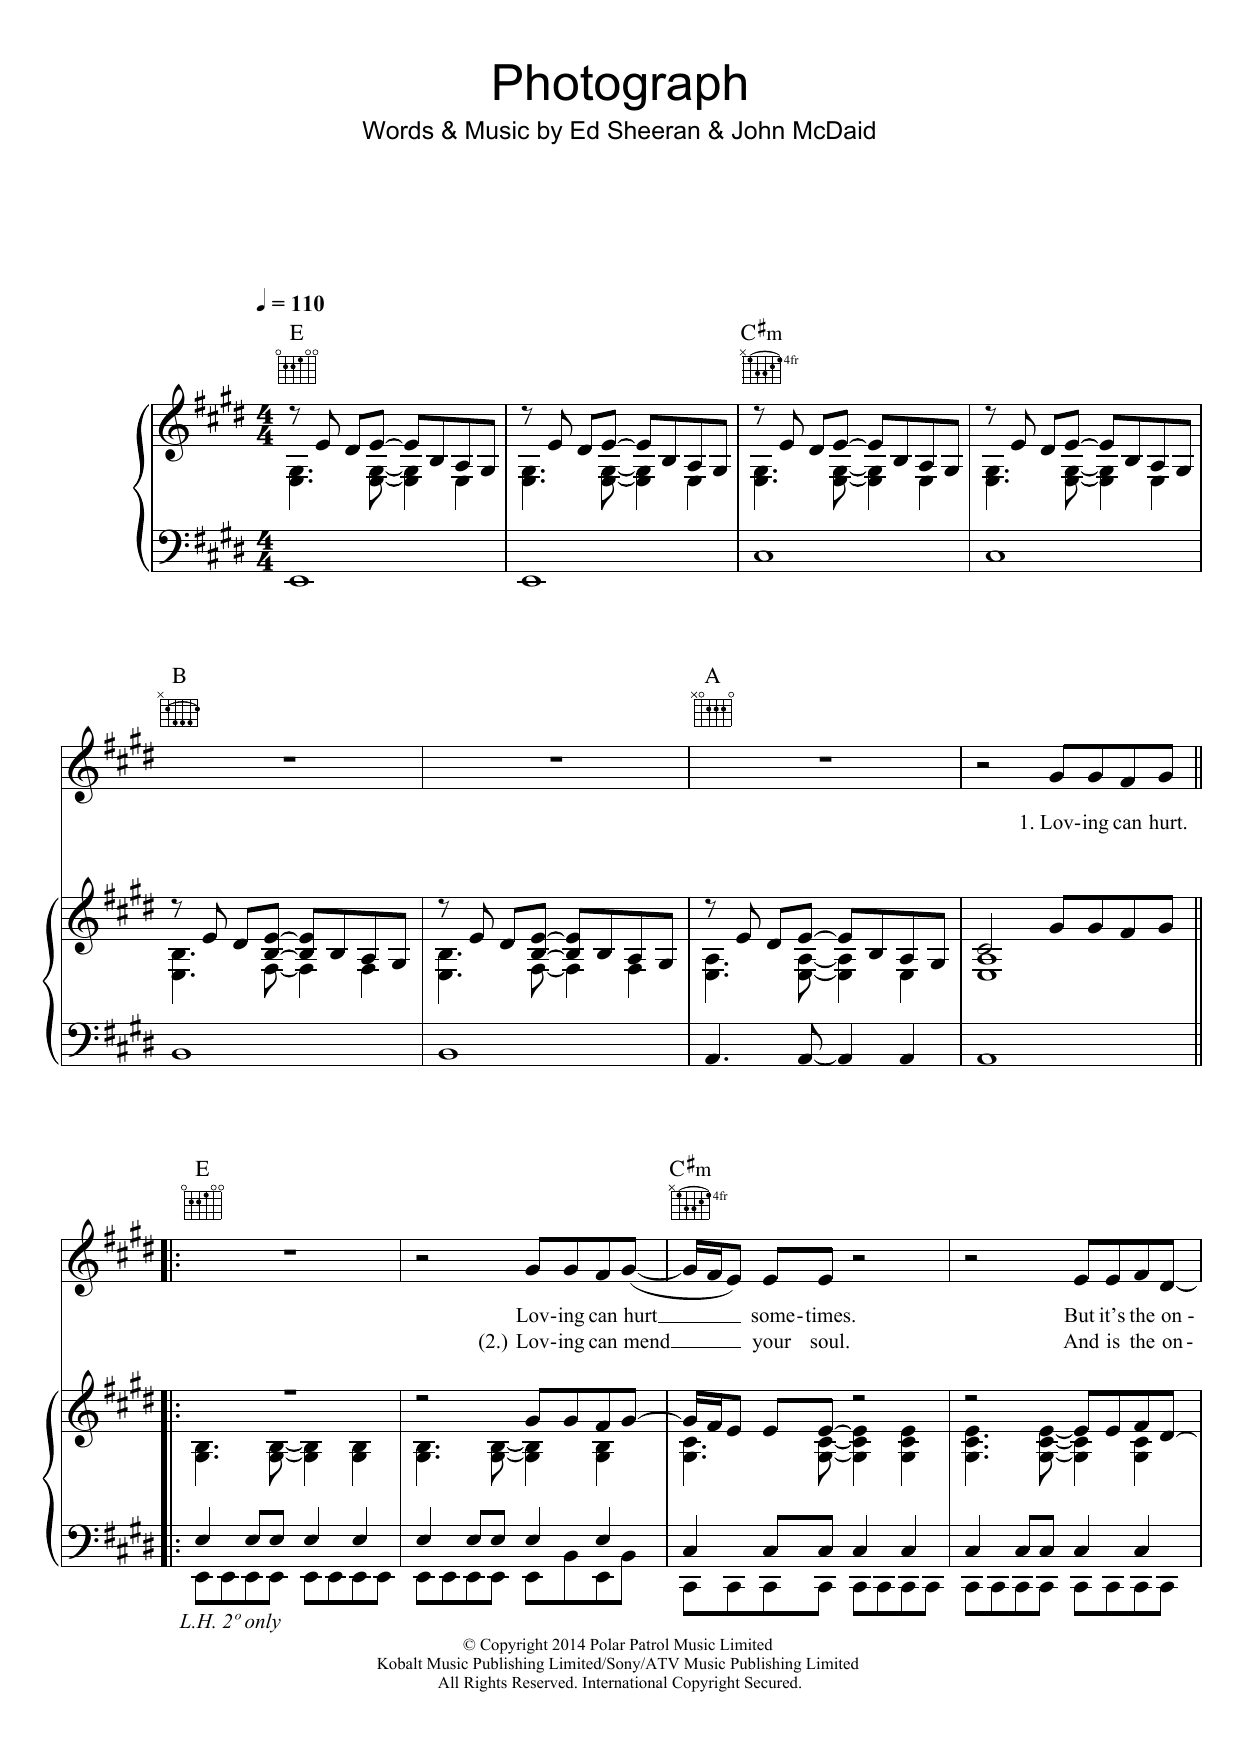 Ed Sheeran Photograph Sheet Music Notes & Chords for Piano, Vocal & Guitar - Download or Print PDF